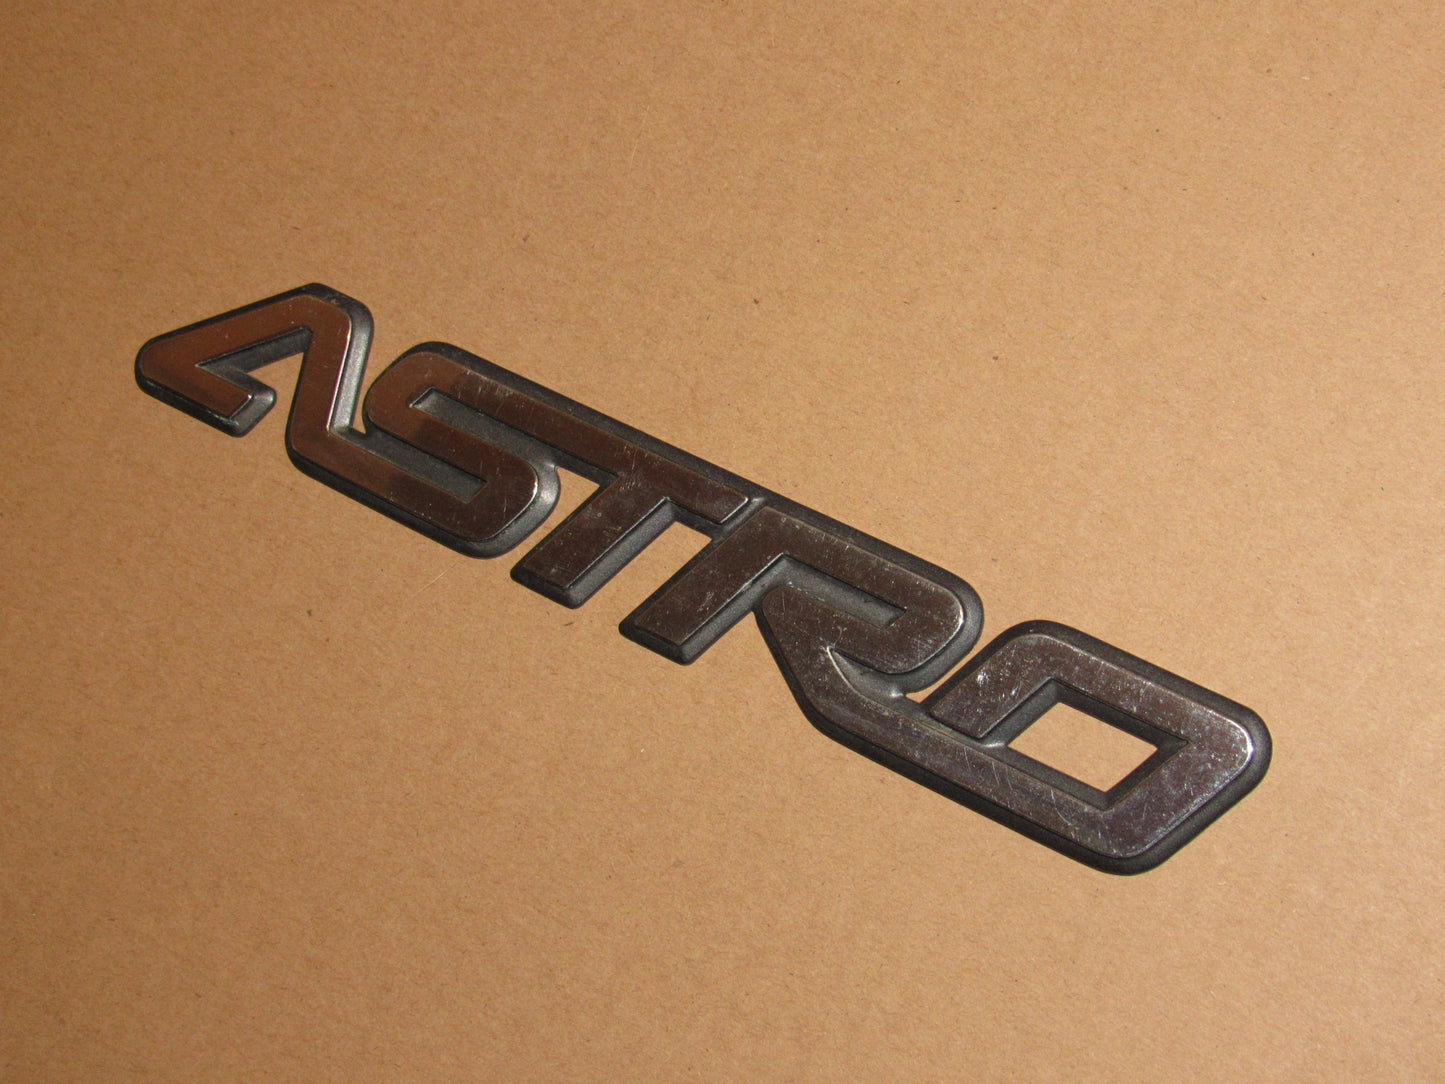 95-05 Chevrolet Astro OEM Rear Tailgate Astro Badge Emblem